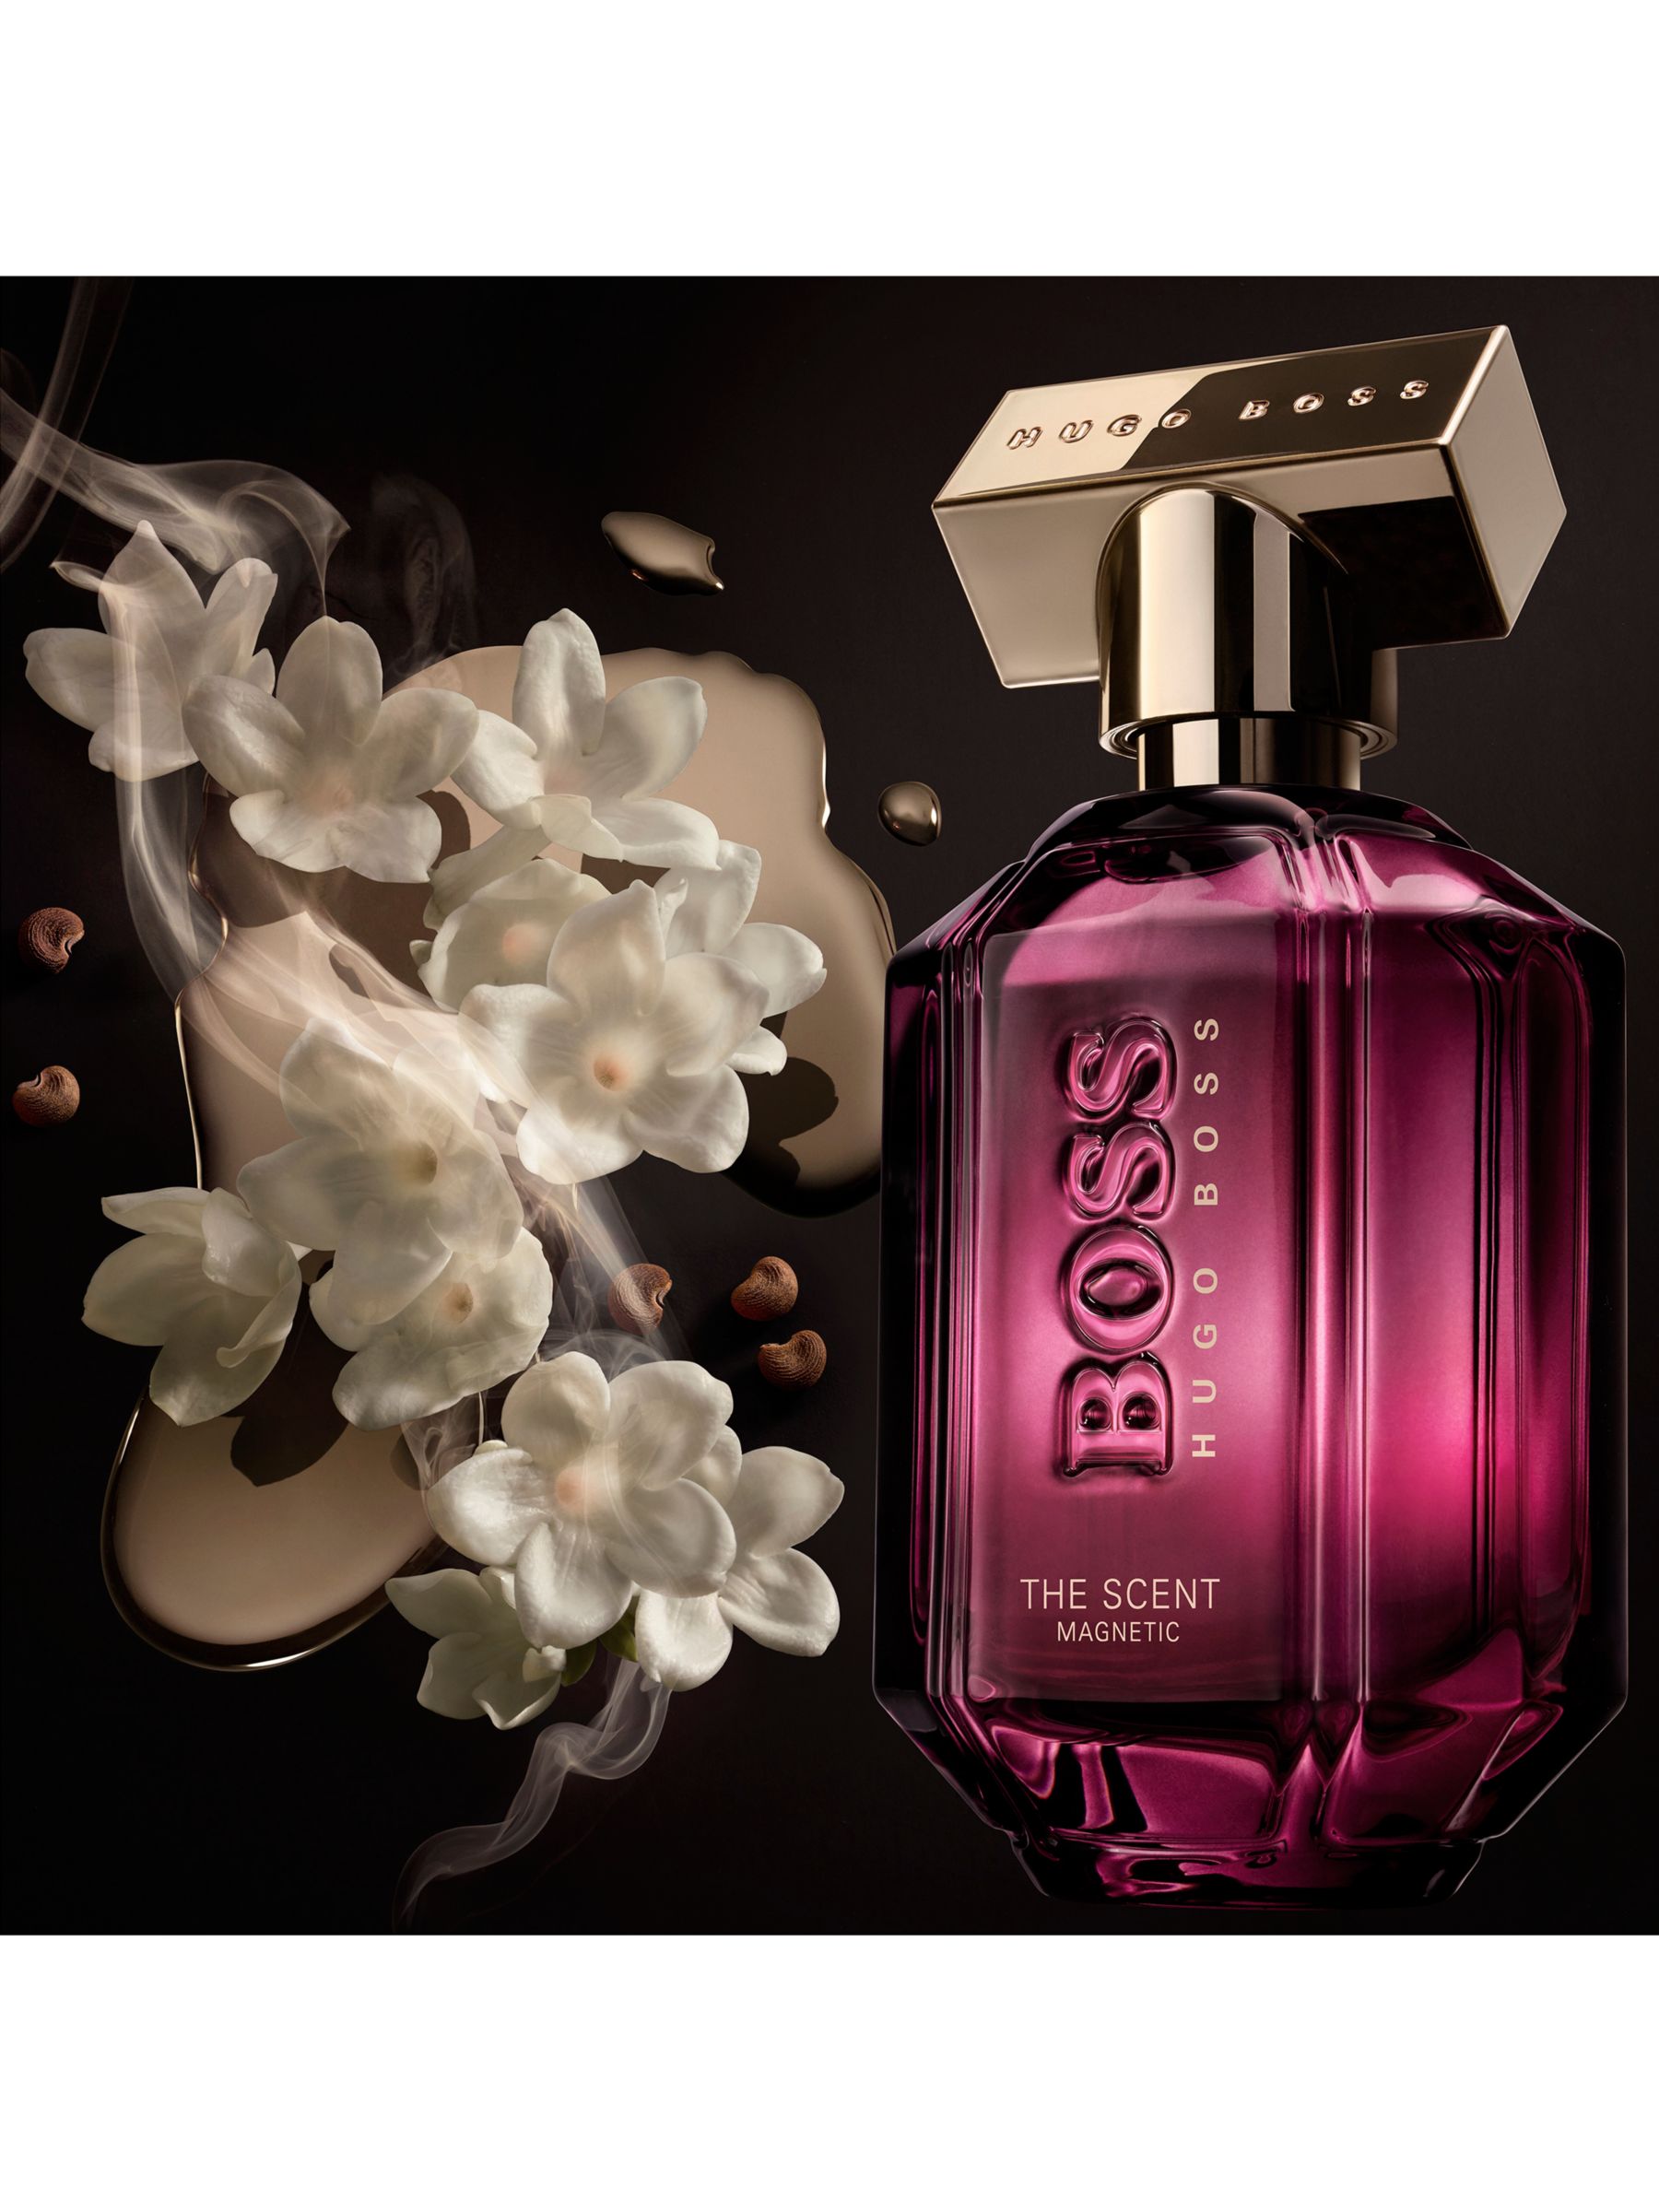 HUGO BOSS BOSS The Scent Magnetic For Her Eau de Parfum, 30ml 3